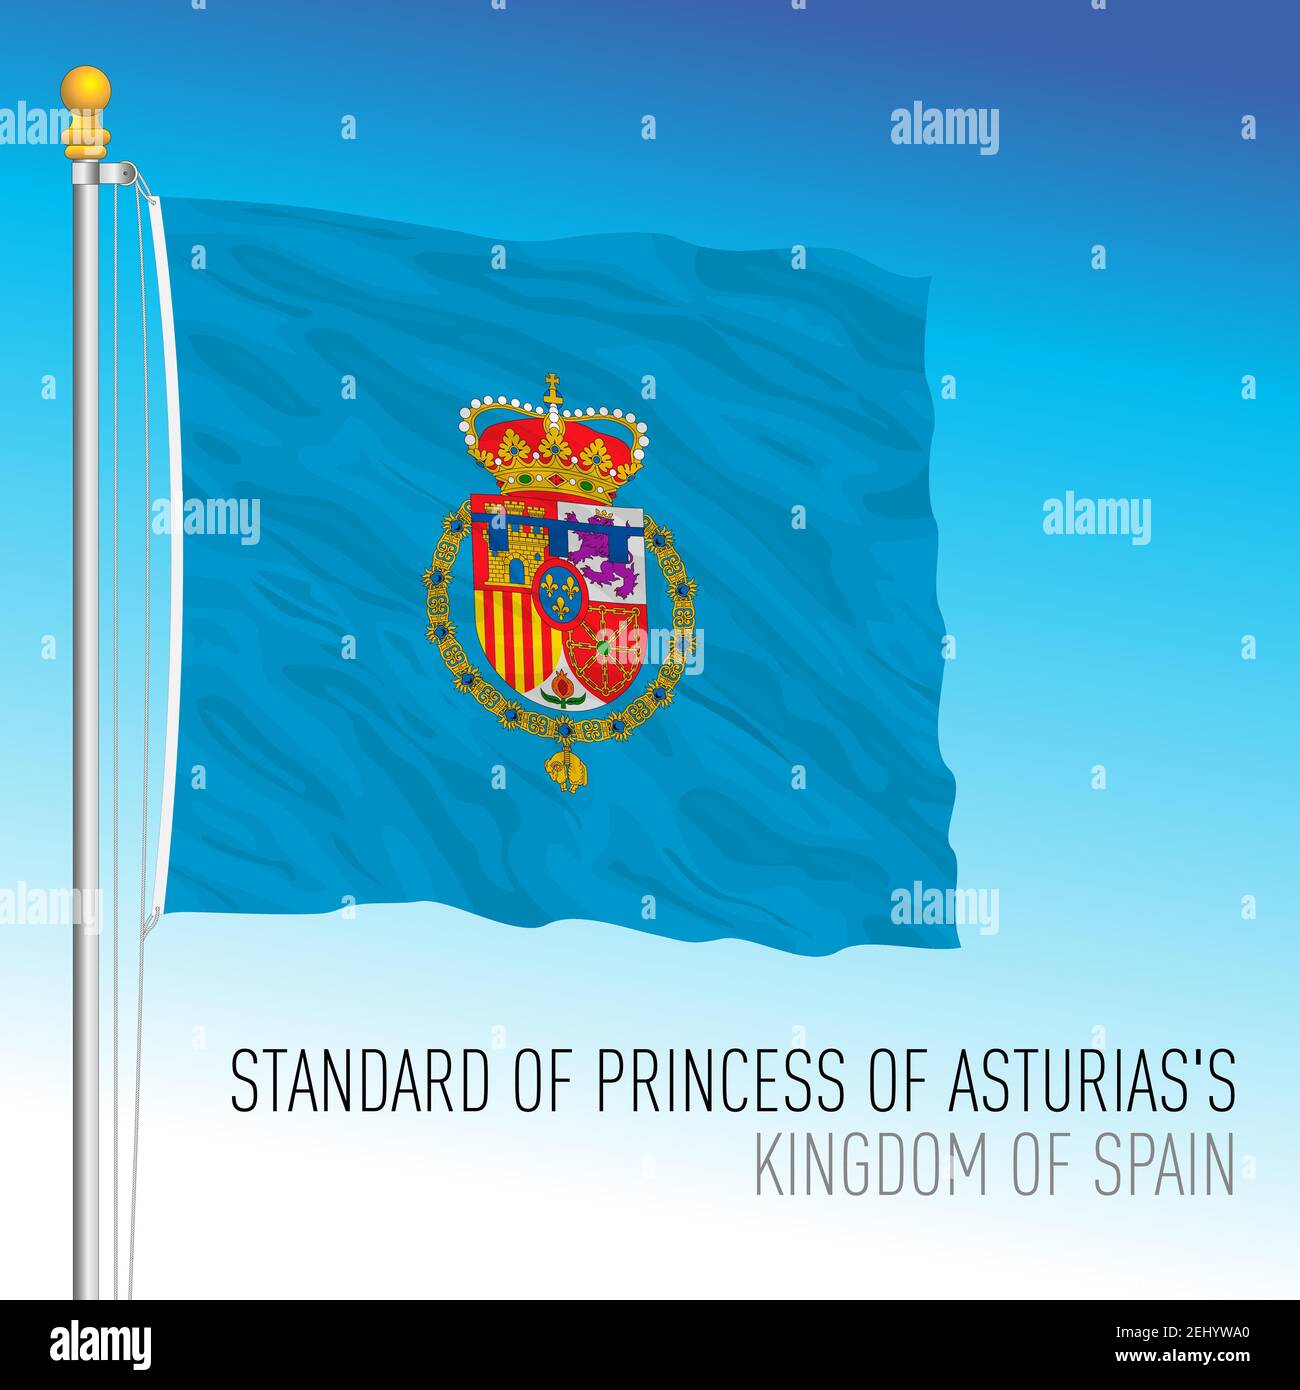 Princess of Asturias's flag, kingdom of Spain, European Union, vector illustration Stock Vector